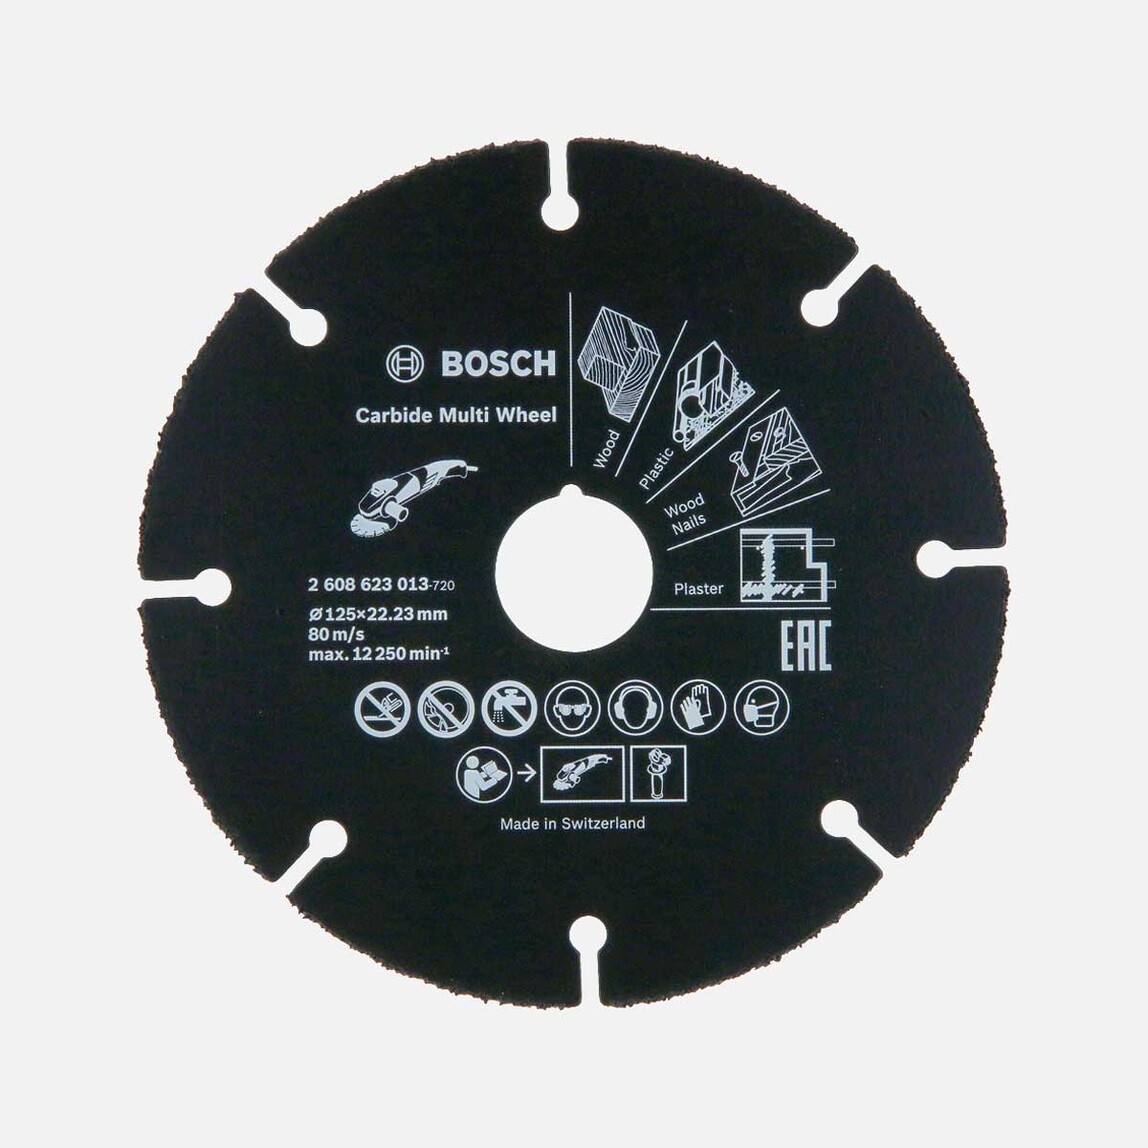    Bosch Carbide Multiwheel 125 mm  